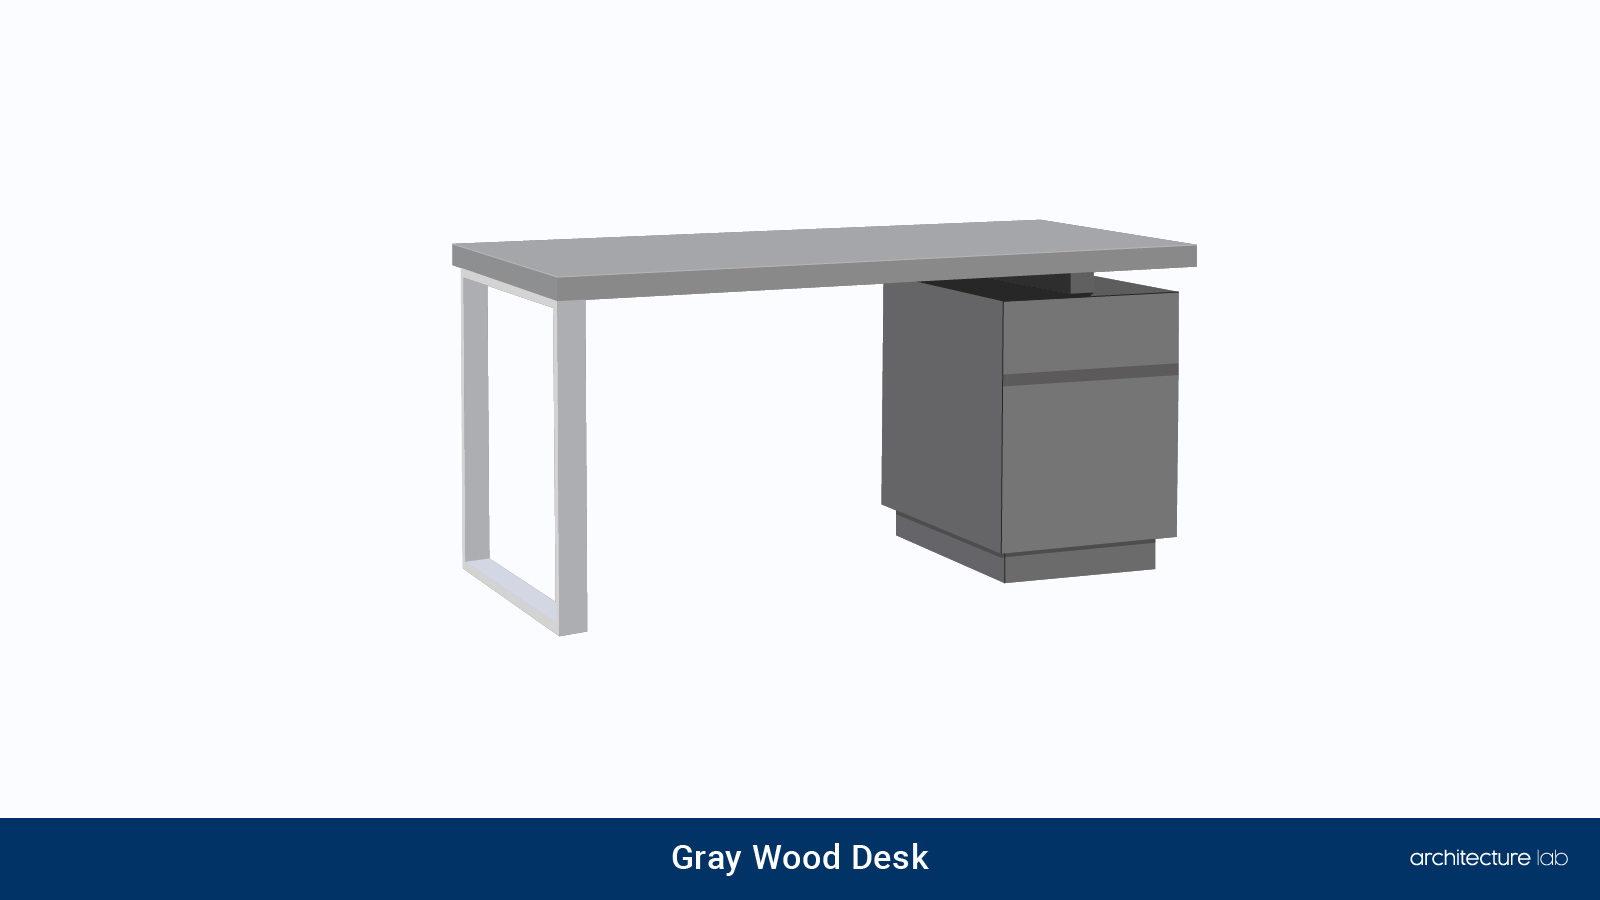 31. Gray wood desk